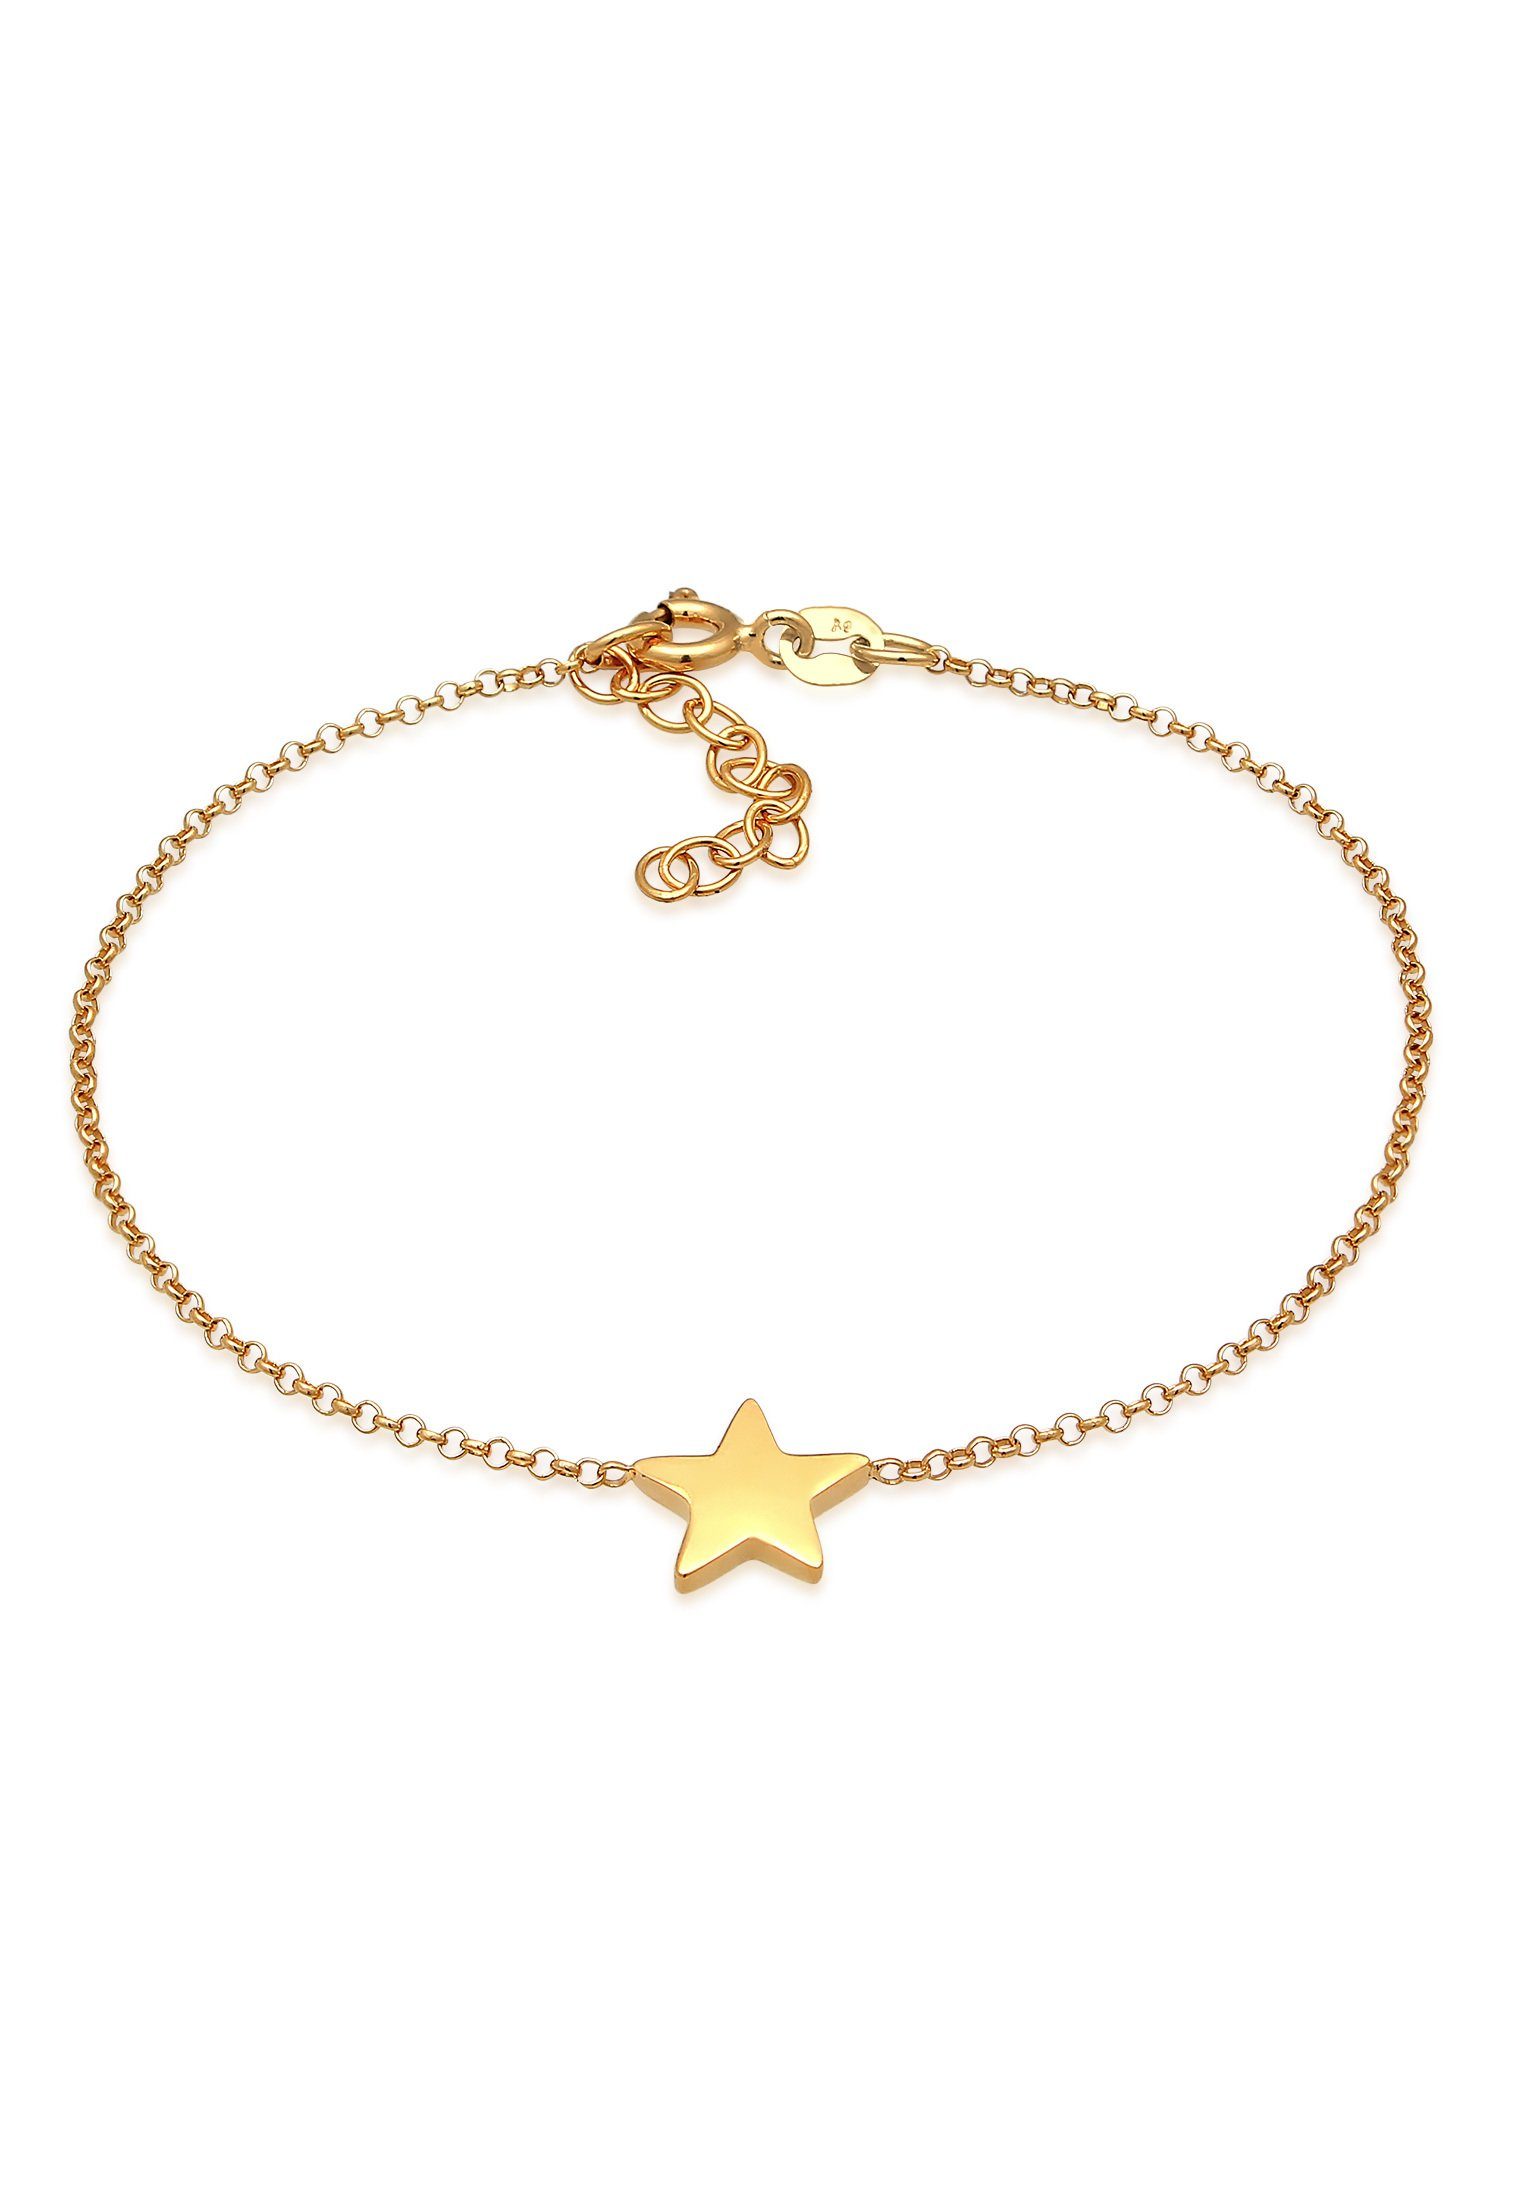 Sterne Trend Elli Armband Gold Silber, 925 Astro Stern Zart